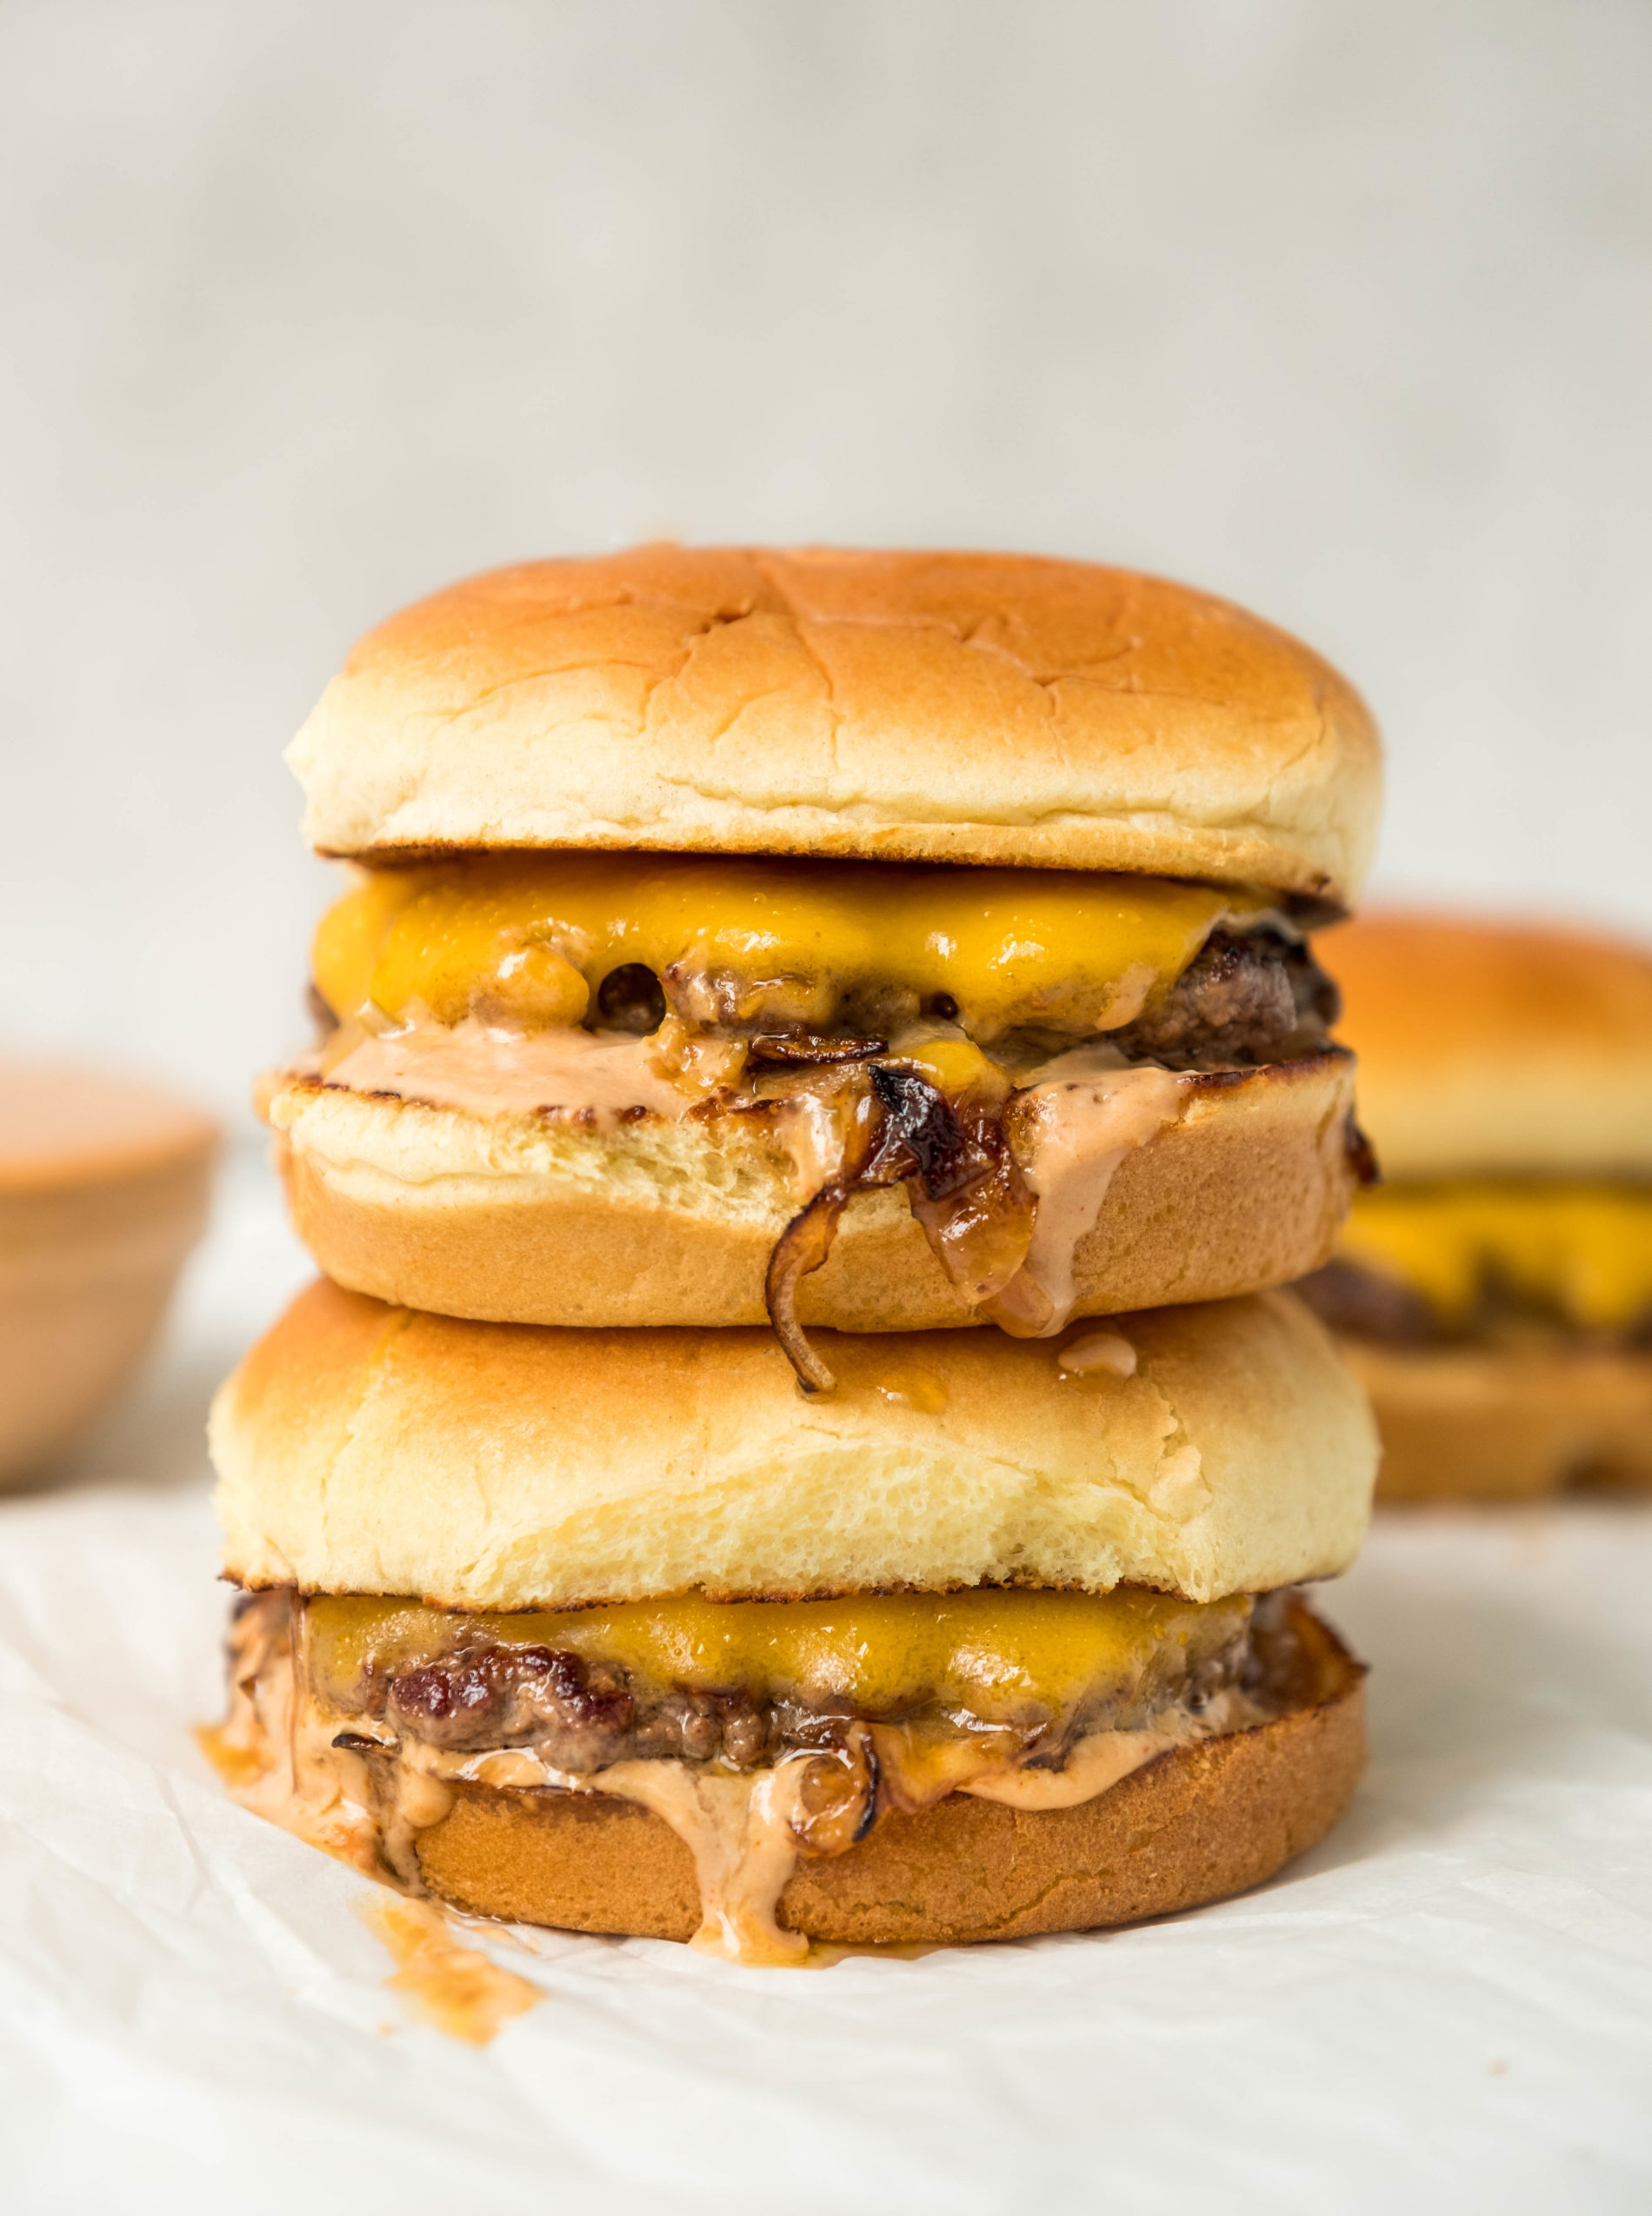 Smash Burger Recipe - The Best Smashburger Recipe